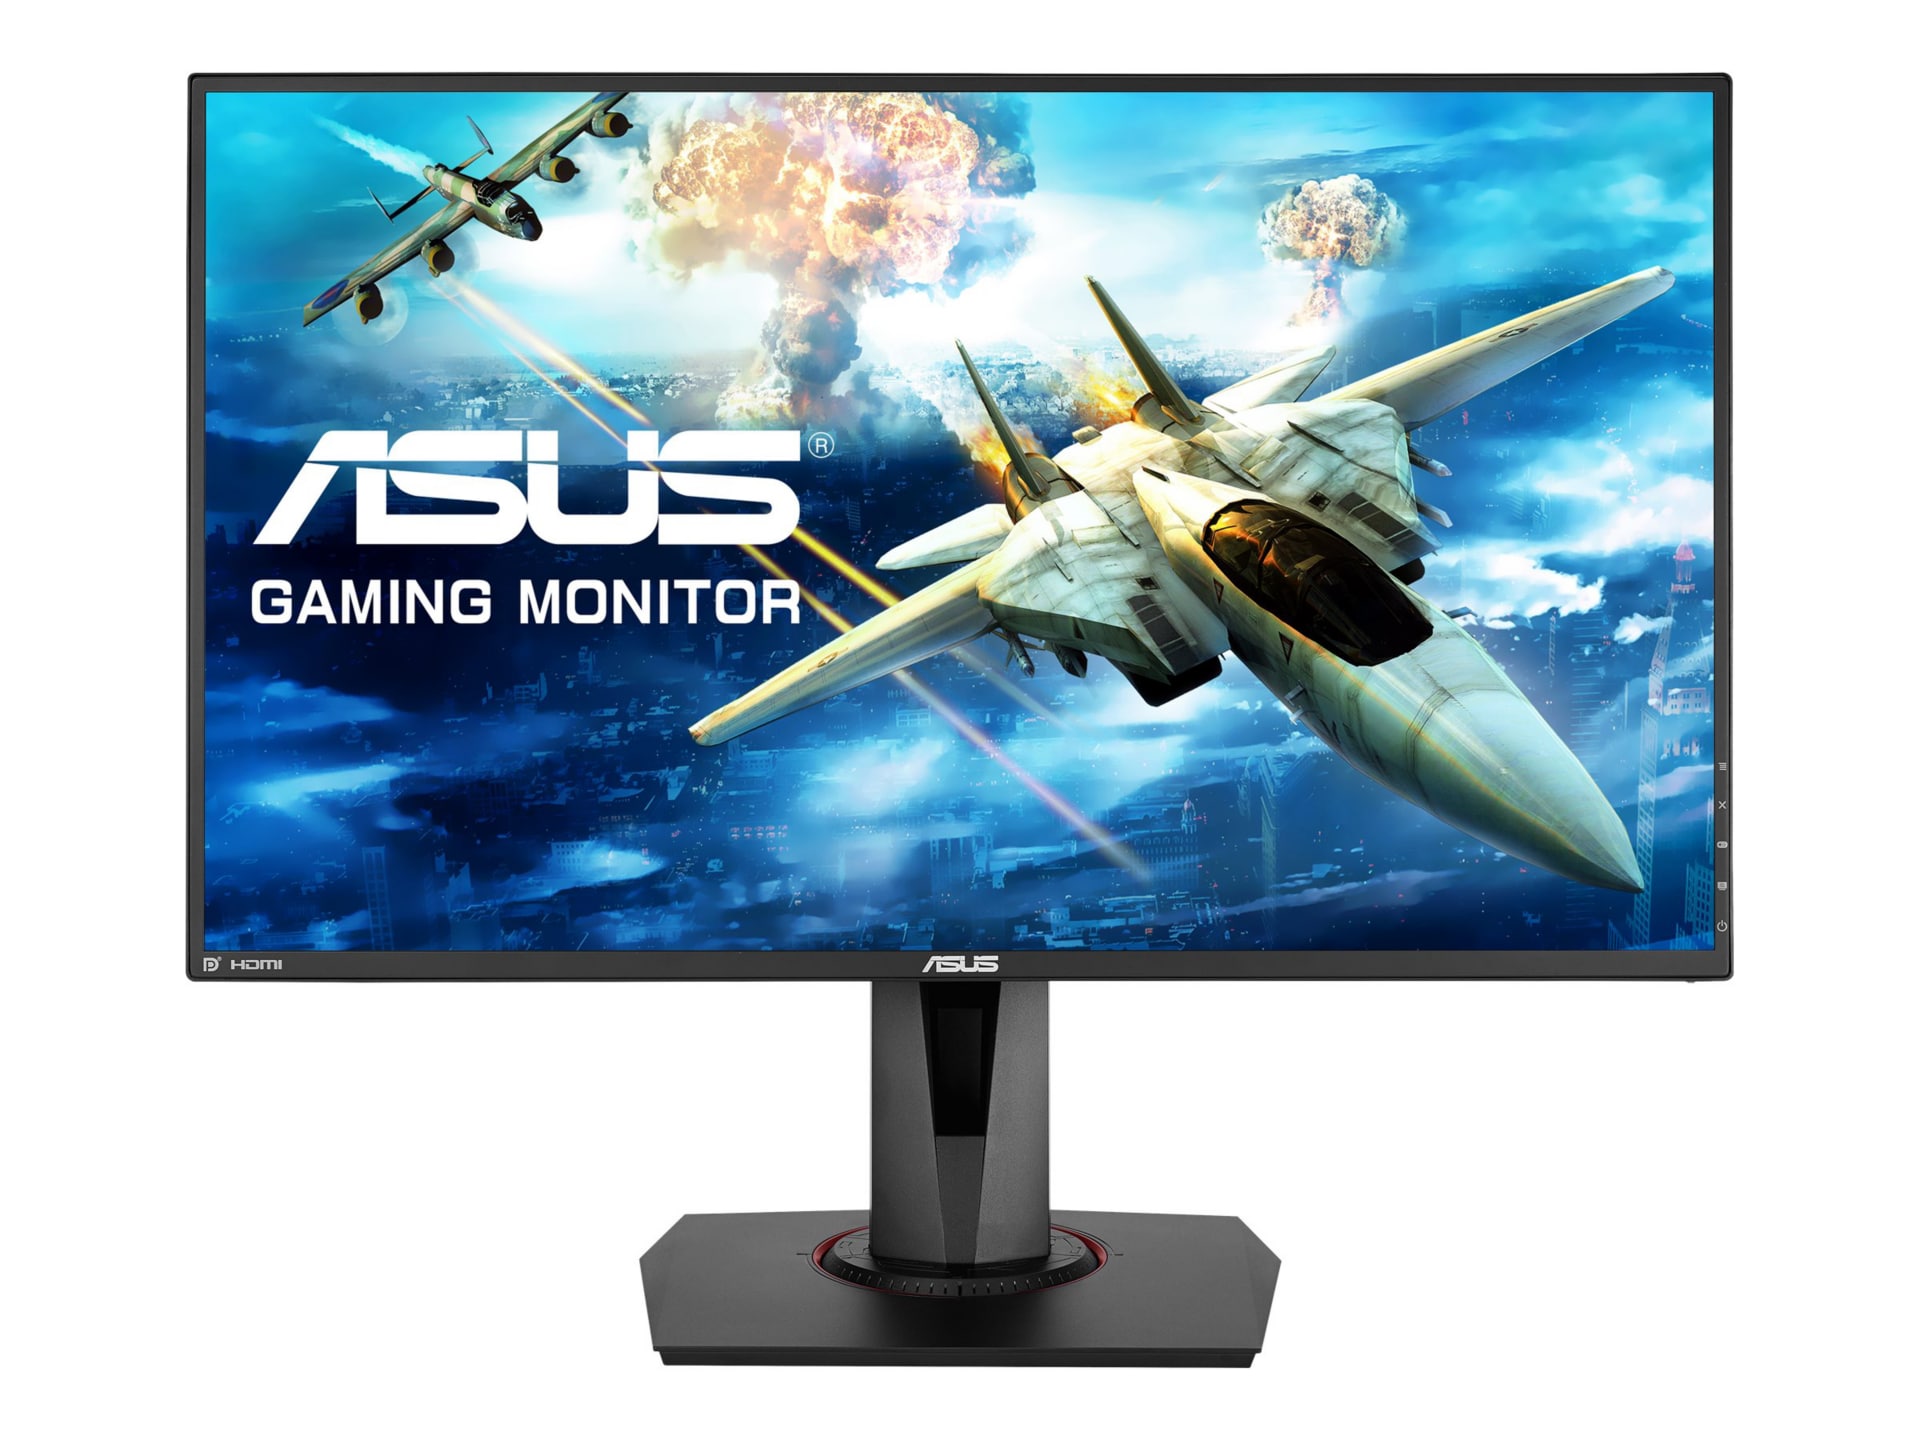 ASUS VG278QR - LCD monitor - Full HD (1080p) - 27"